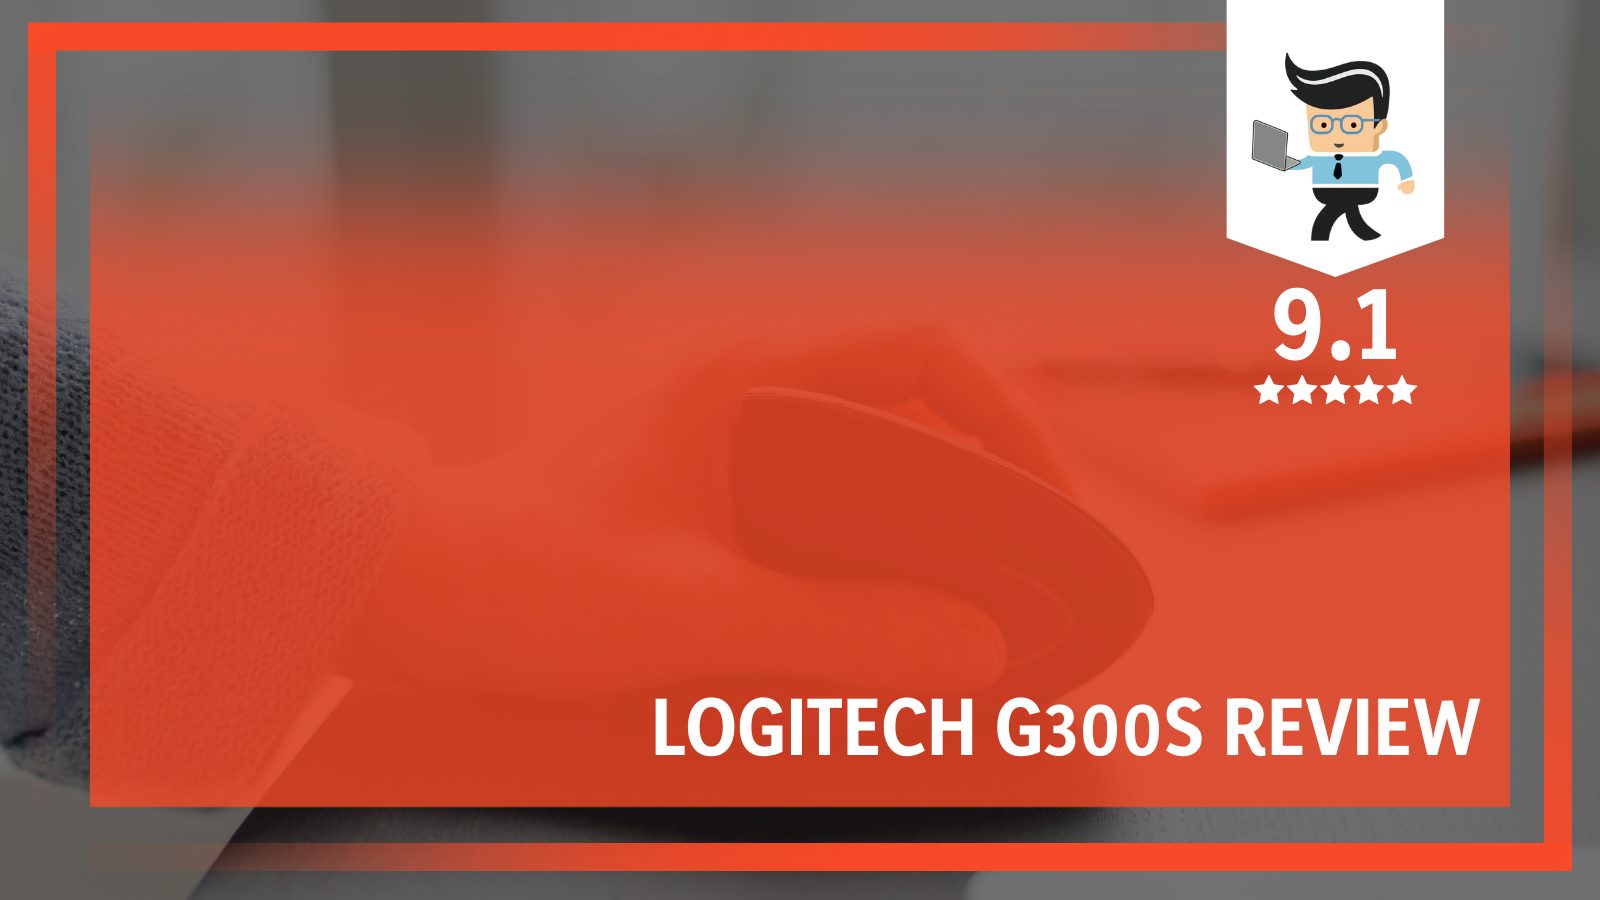 Logitech G300s Review